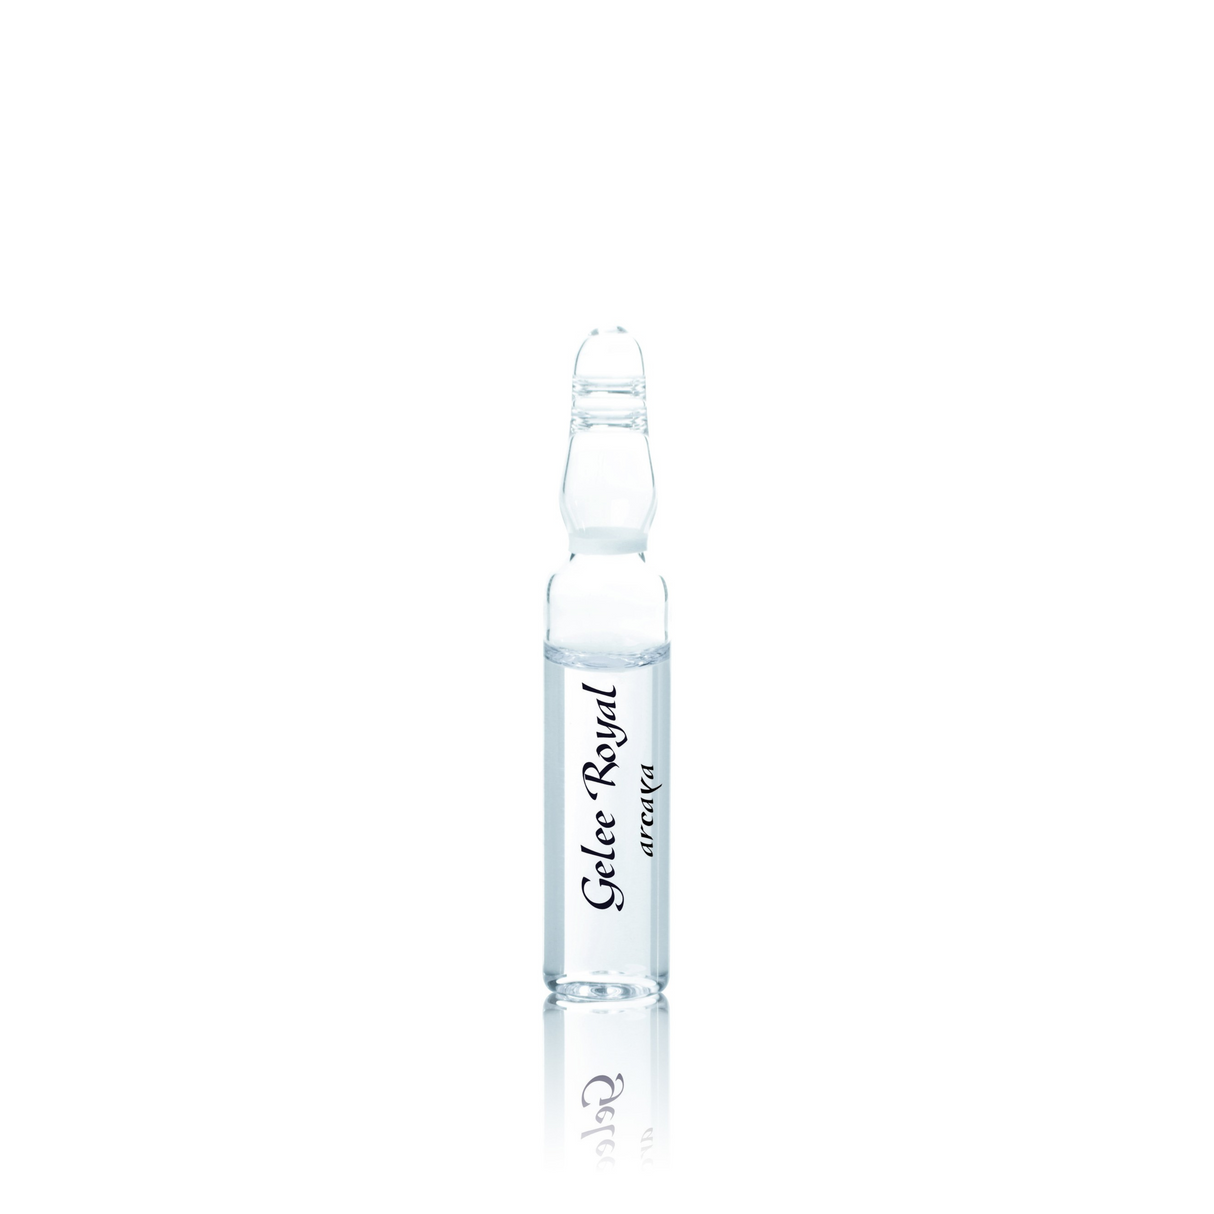 Arcaya Gelee Royal Ampoule, for anti-aging / nourishment & elasticity